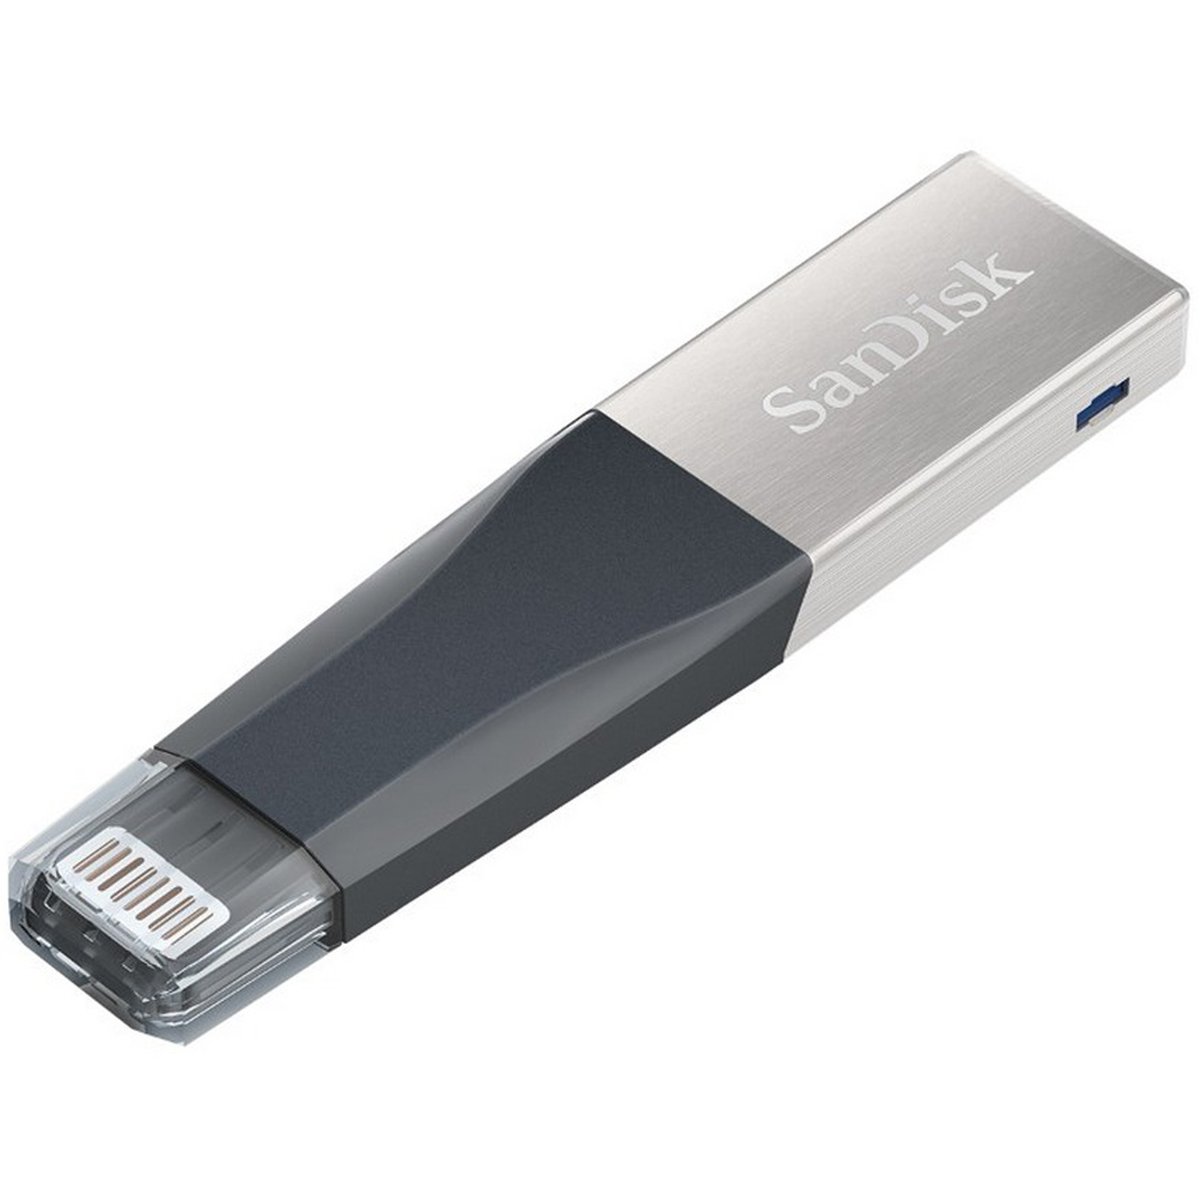 Sandisk Dual Drive iXpand Mini IX40N 16GB